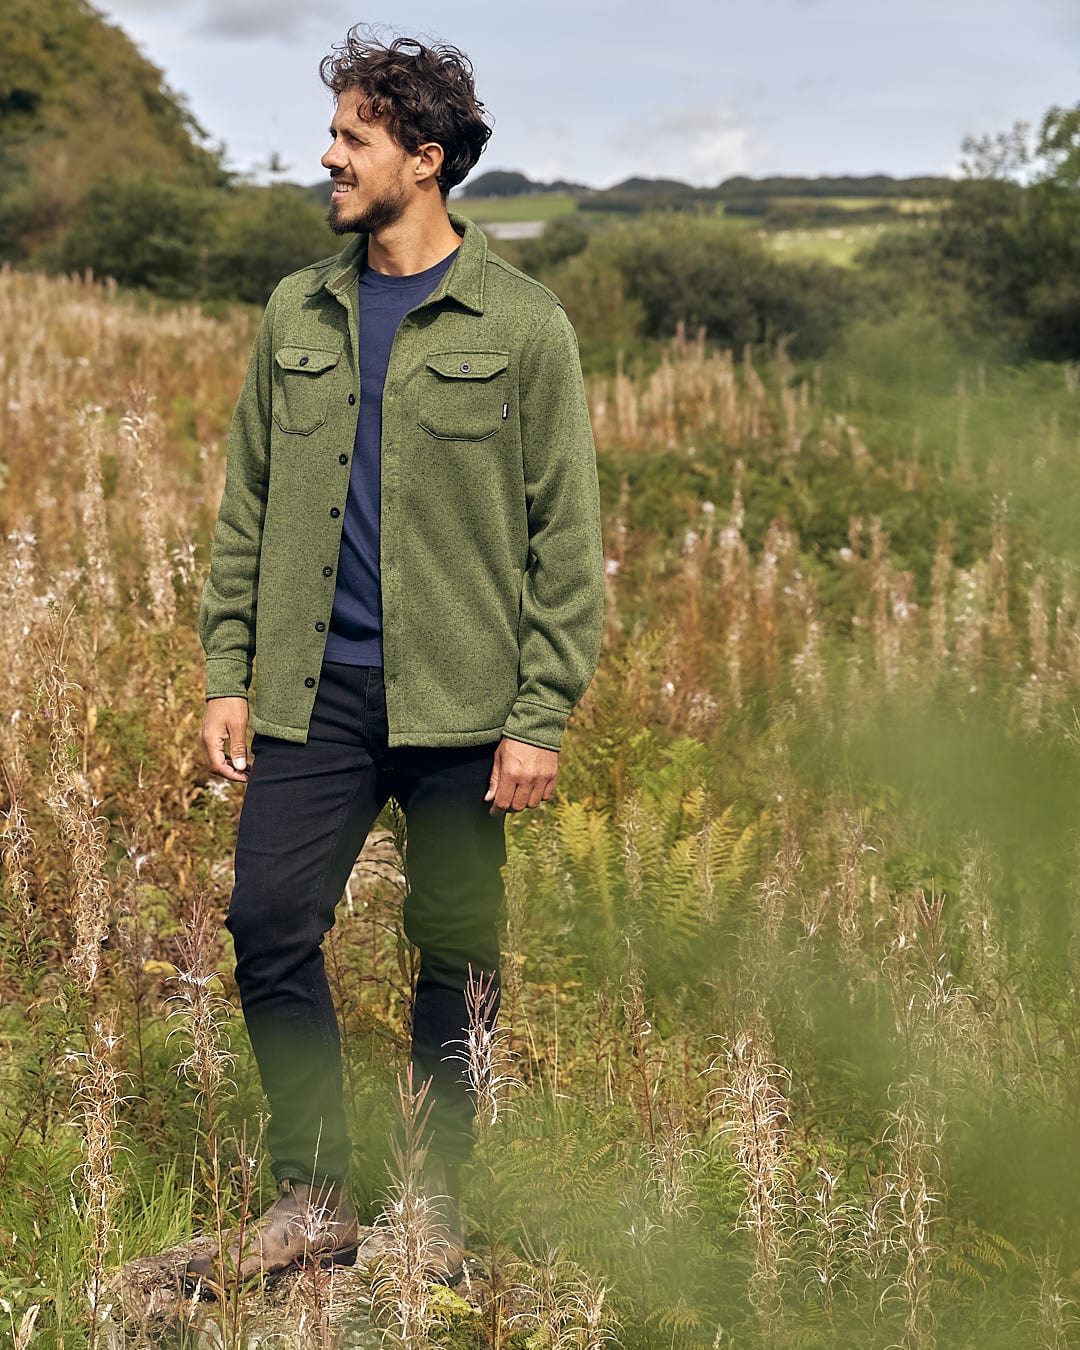 A man in a Saltrock Levick - Mens Long Sleeve Shirt - Dark Green standing in a field.